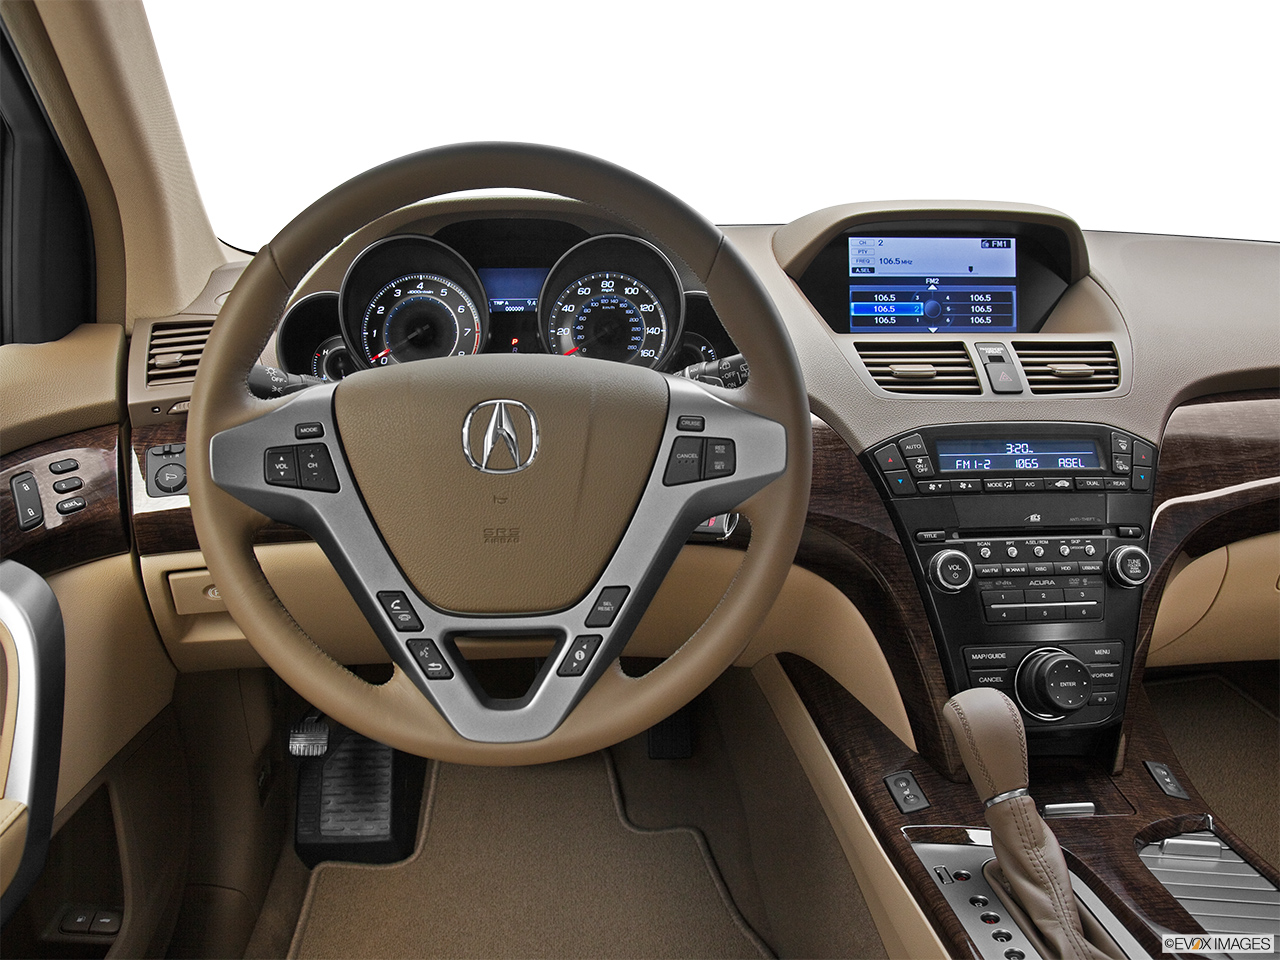 2012 Acura MDX MDX Steering wheel/Center Console. 